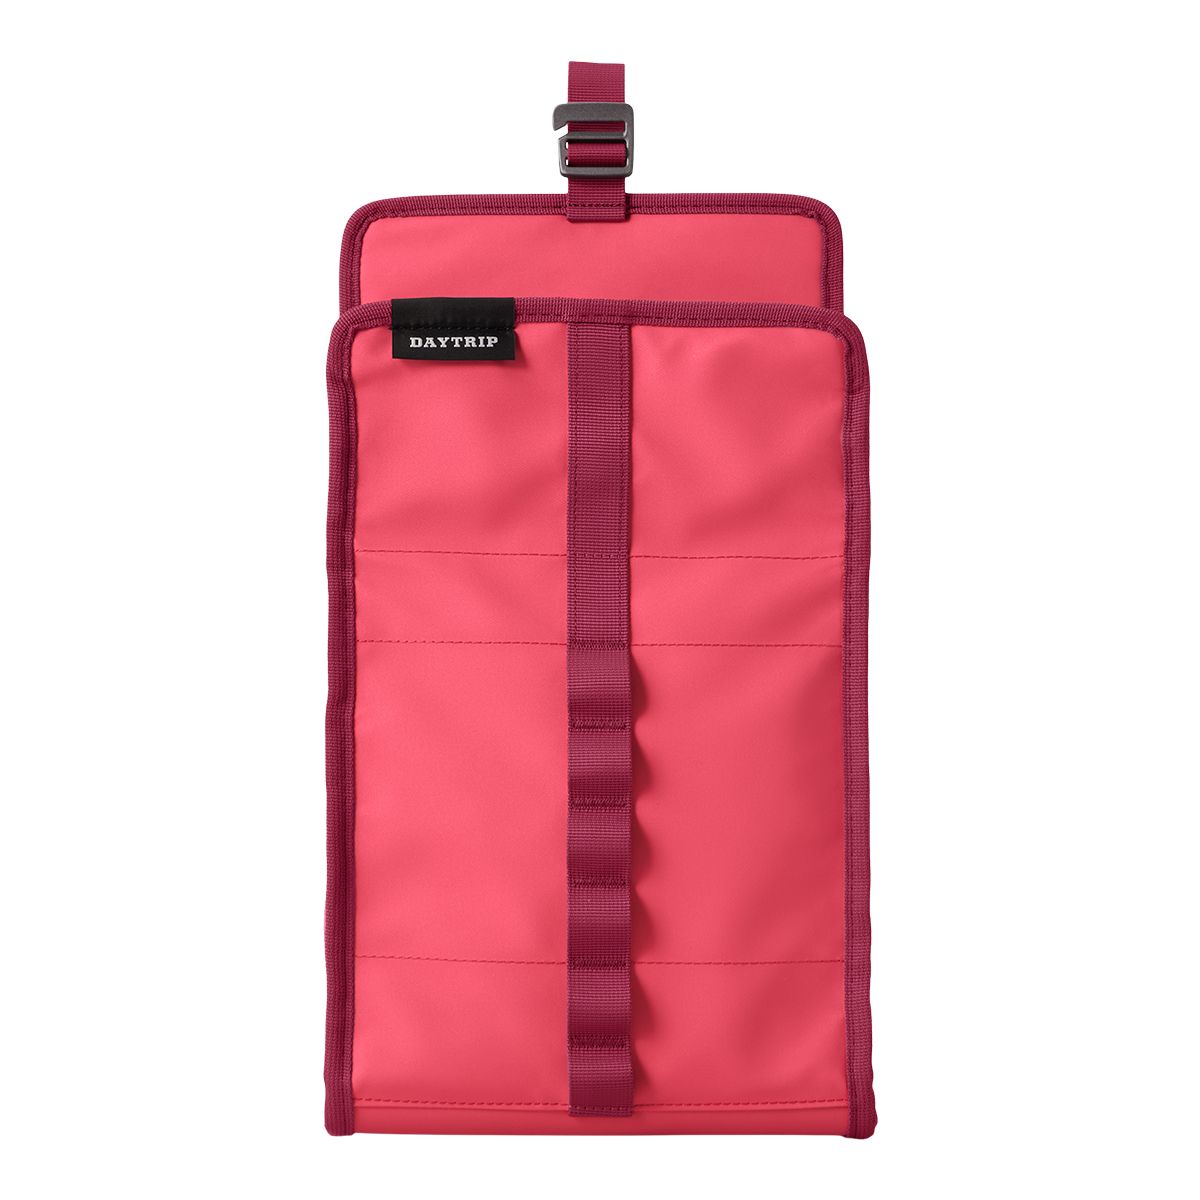 Yeti 18060131060 Sidekick Dry Bag - Bimini Pink 